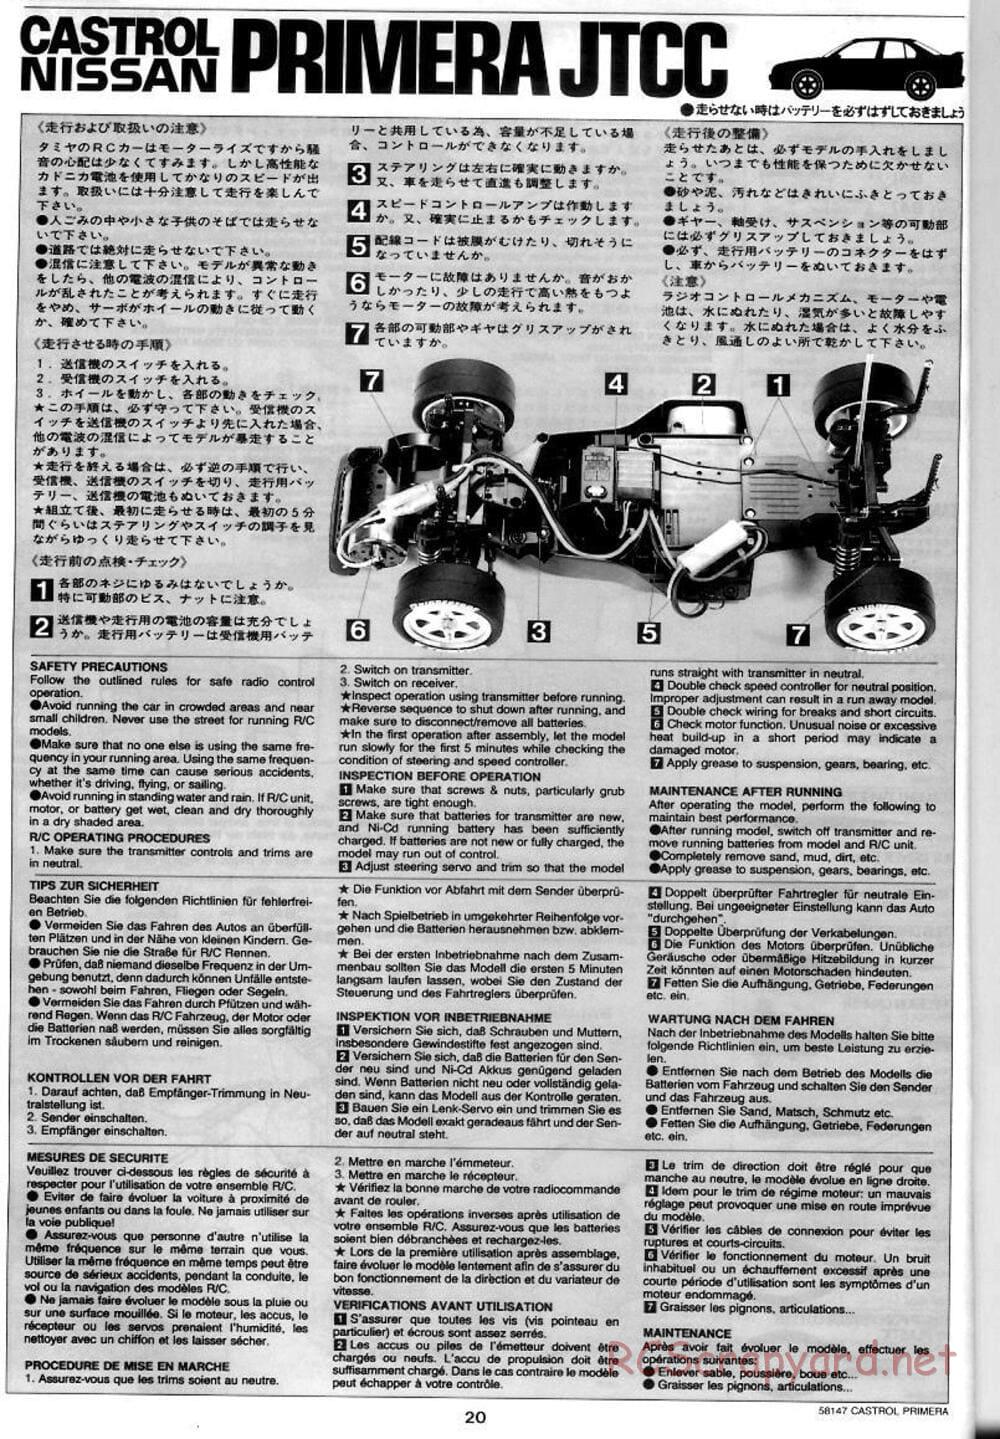 Tamiya - Castrol Nissan Primera JTCC - FF-01 Chassis - Manual - Page 20